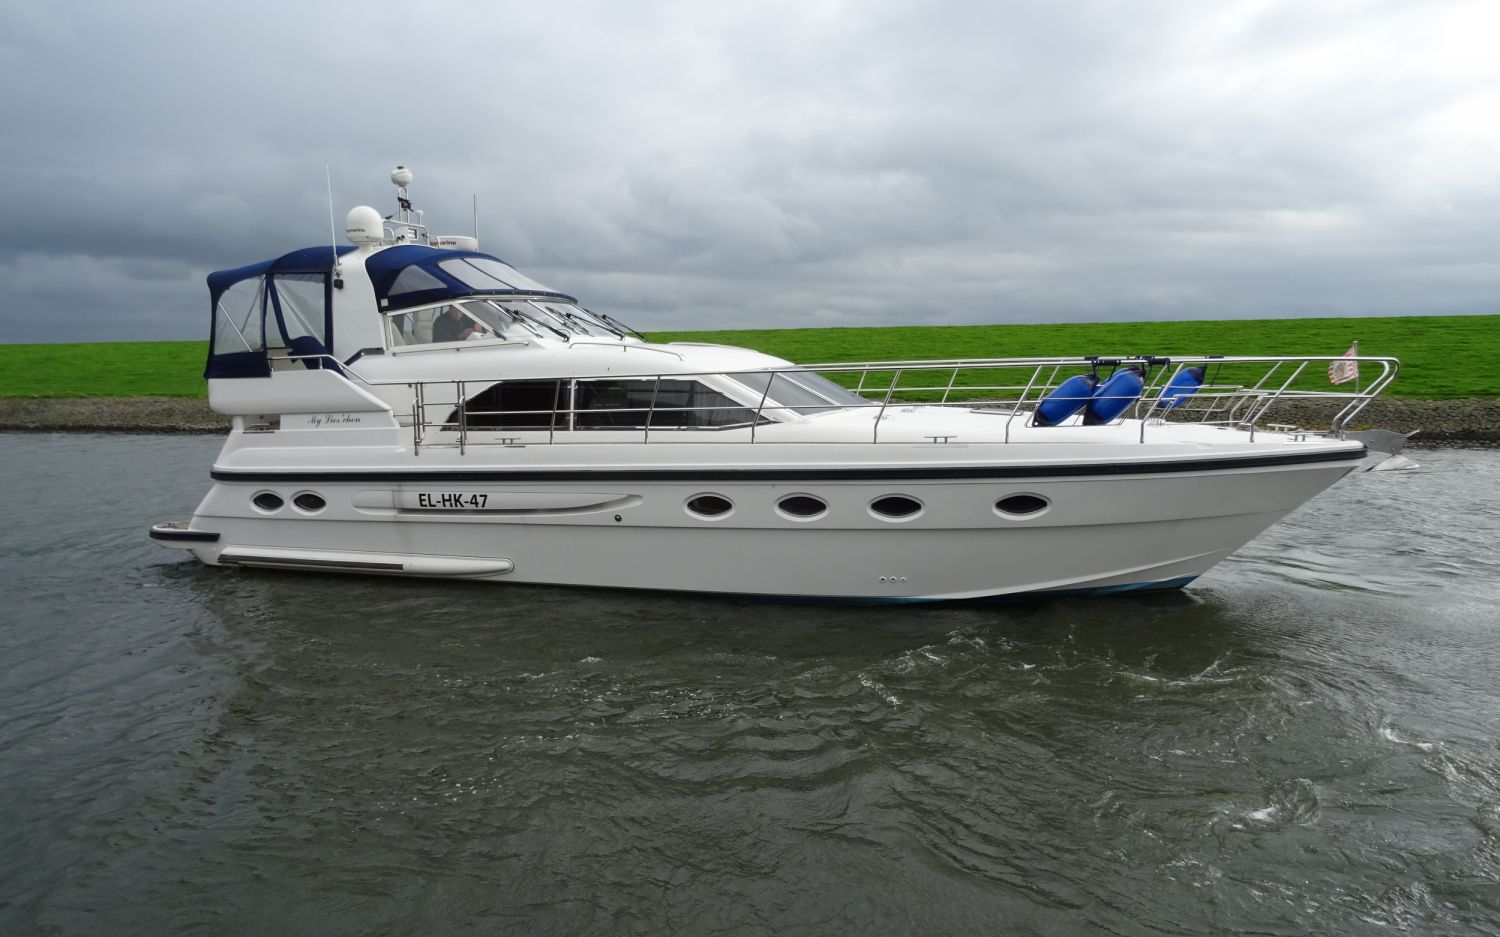 Atlantic 460, Motorjacht for sale by HollandBoat International Yachtbrokers